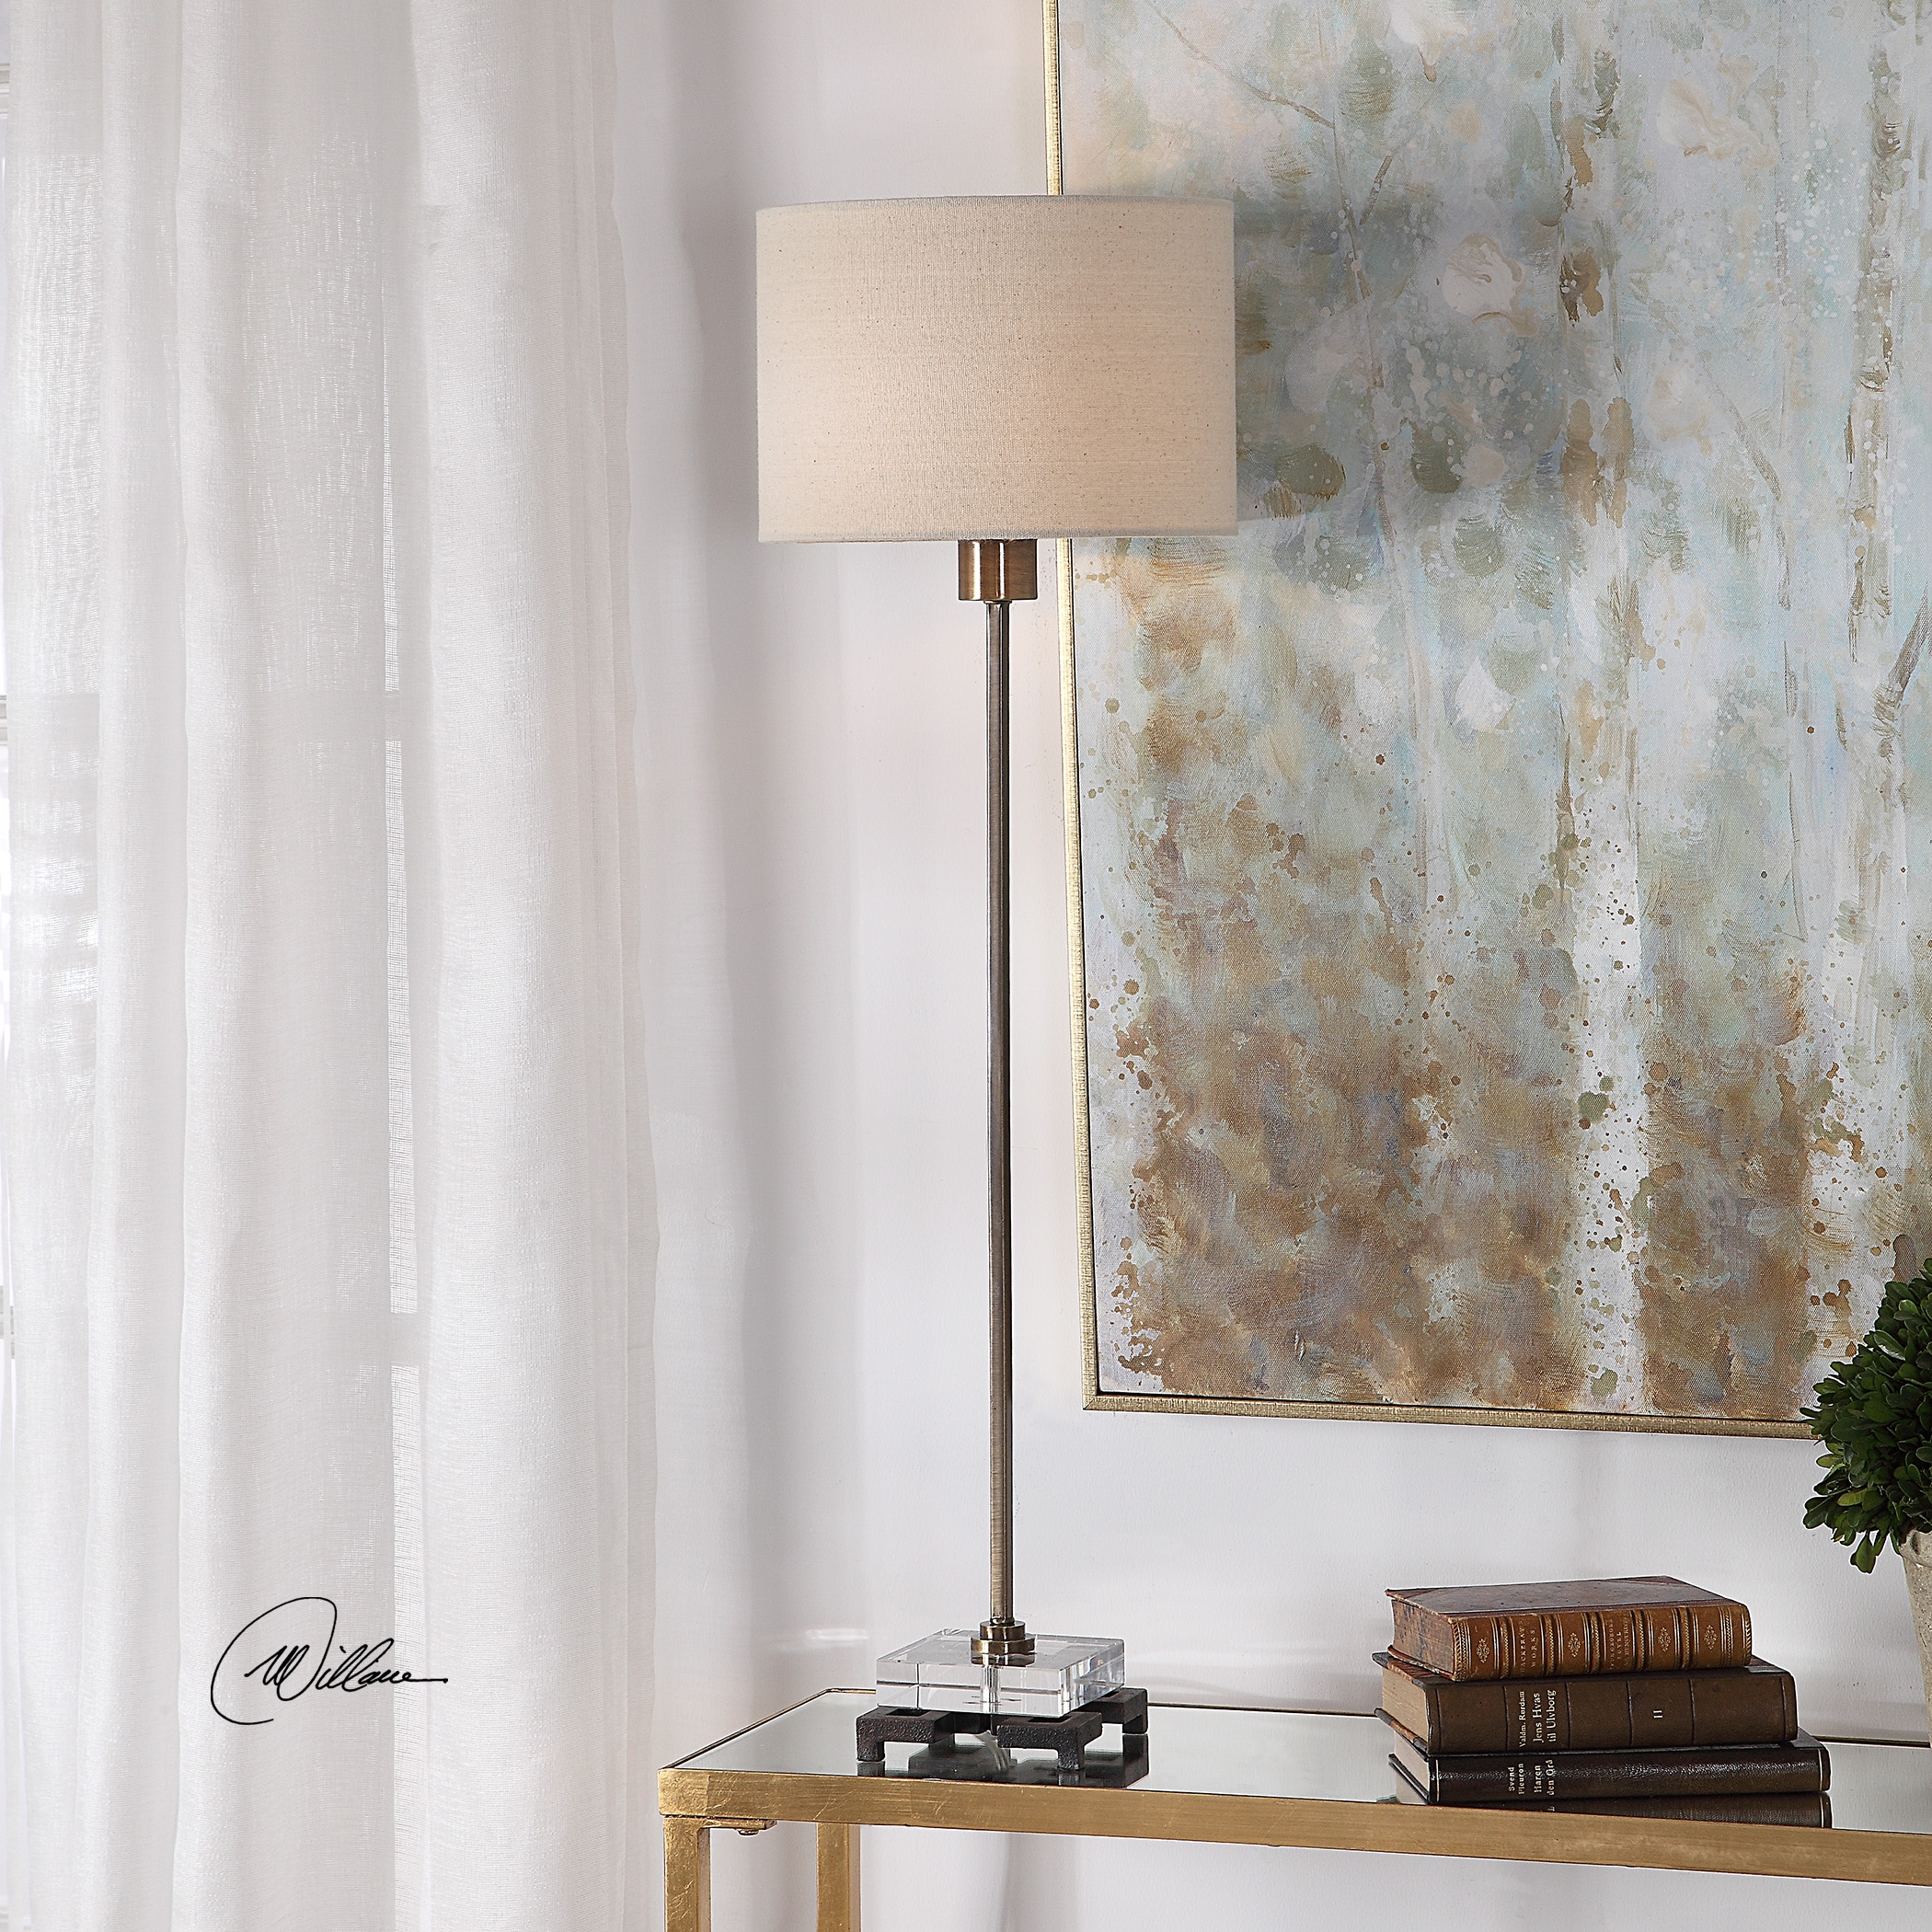 Danyon Brass Table Lamp - Image 2